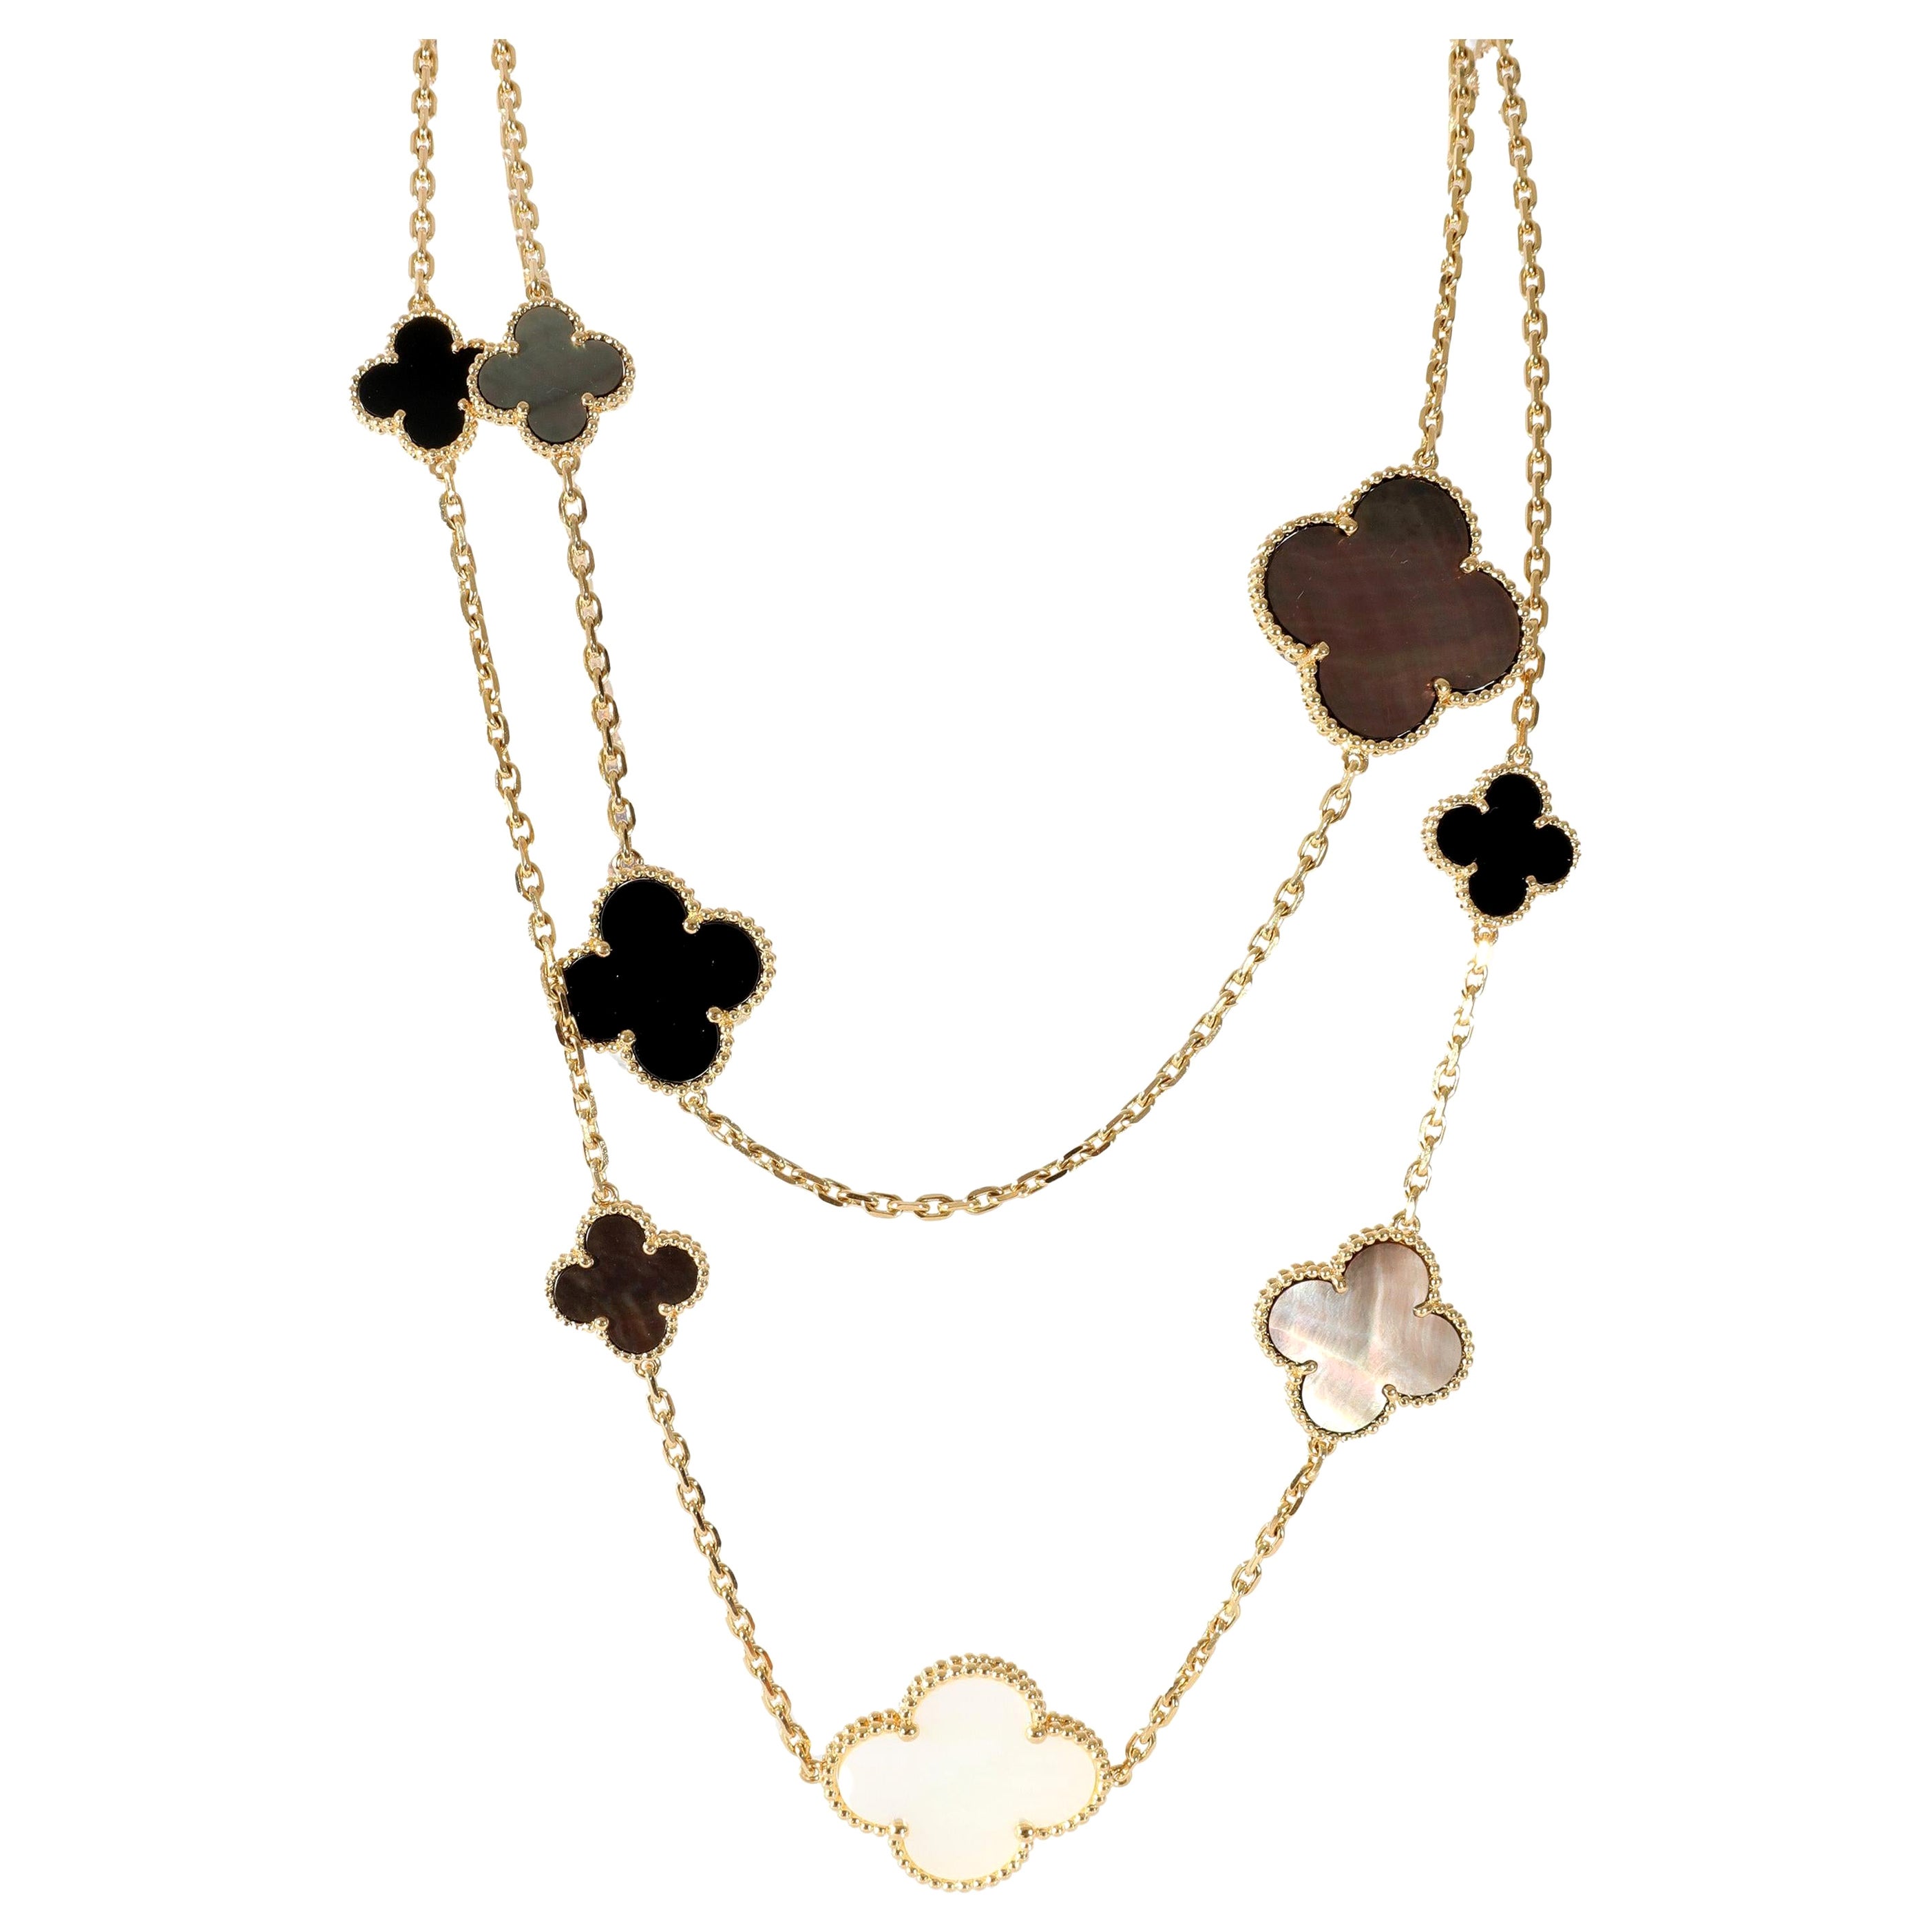 Lucky Clover Necklace, 18K Gold Plated - Van Cleef & Arpels Inspired Design